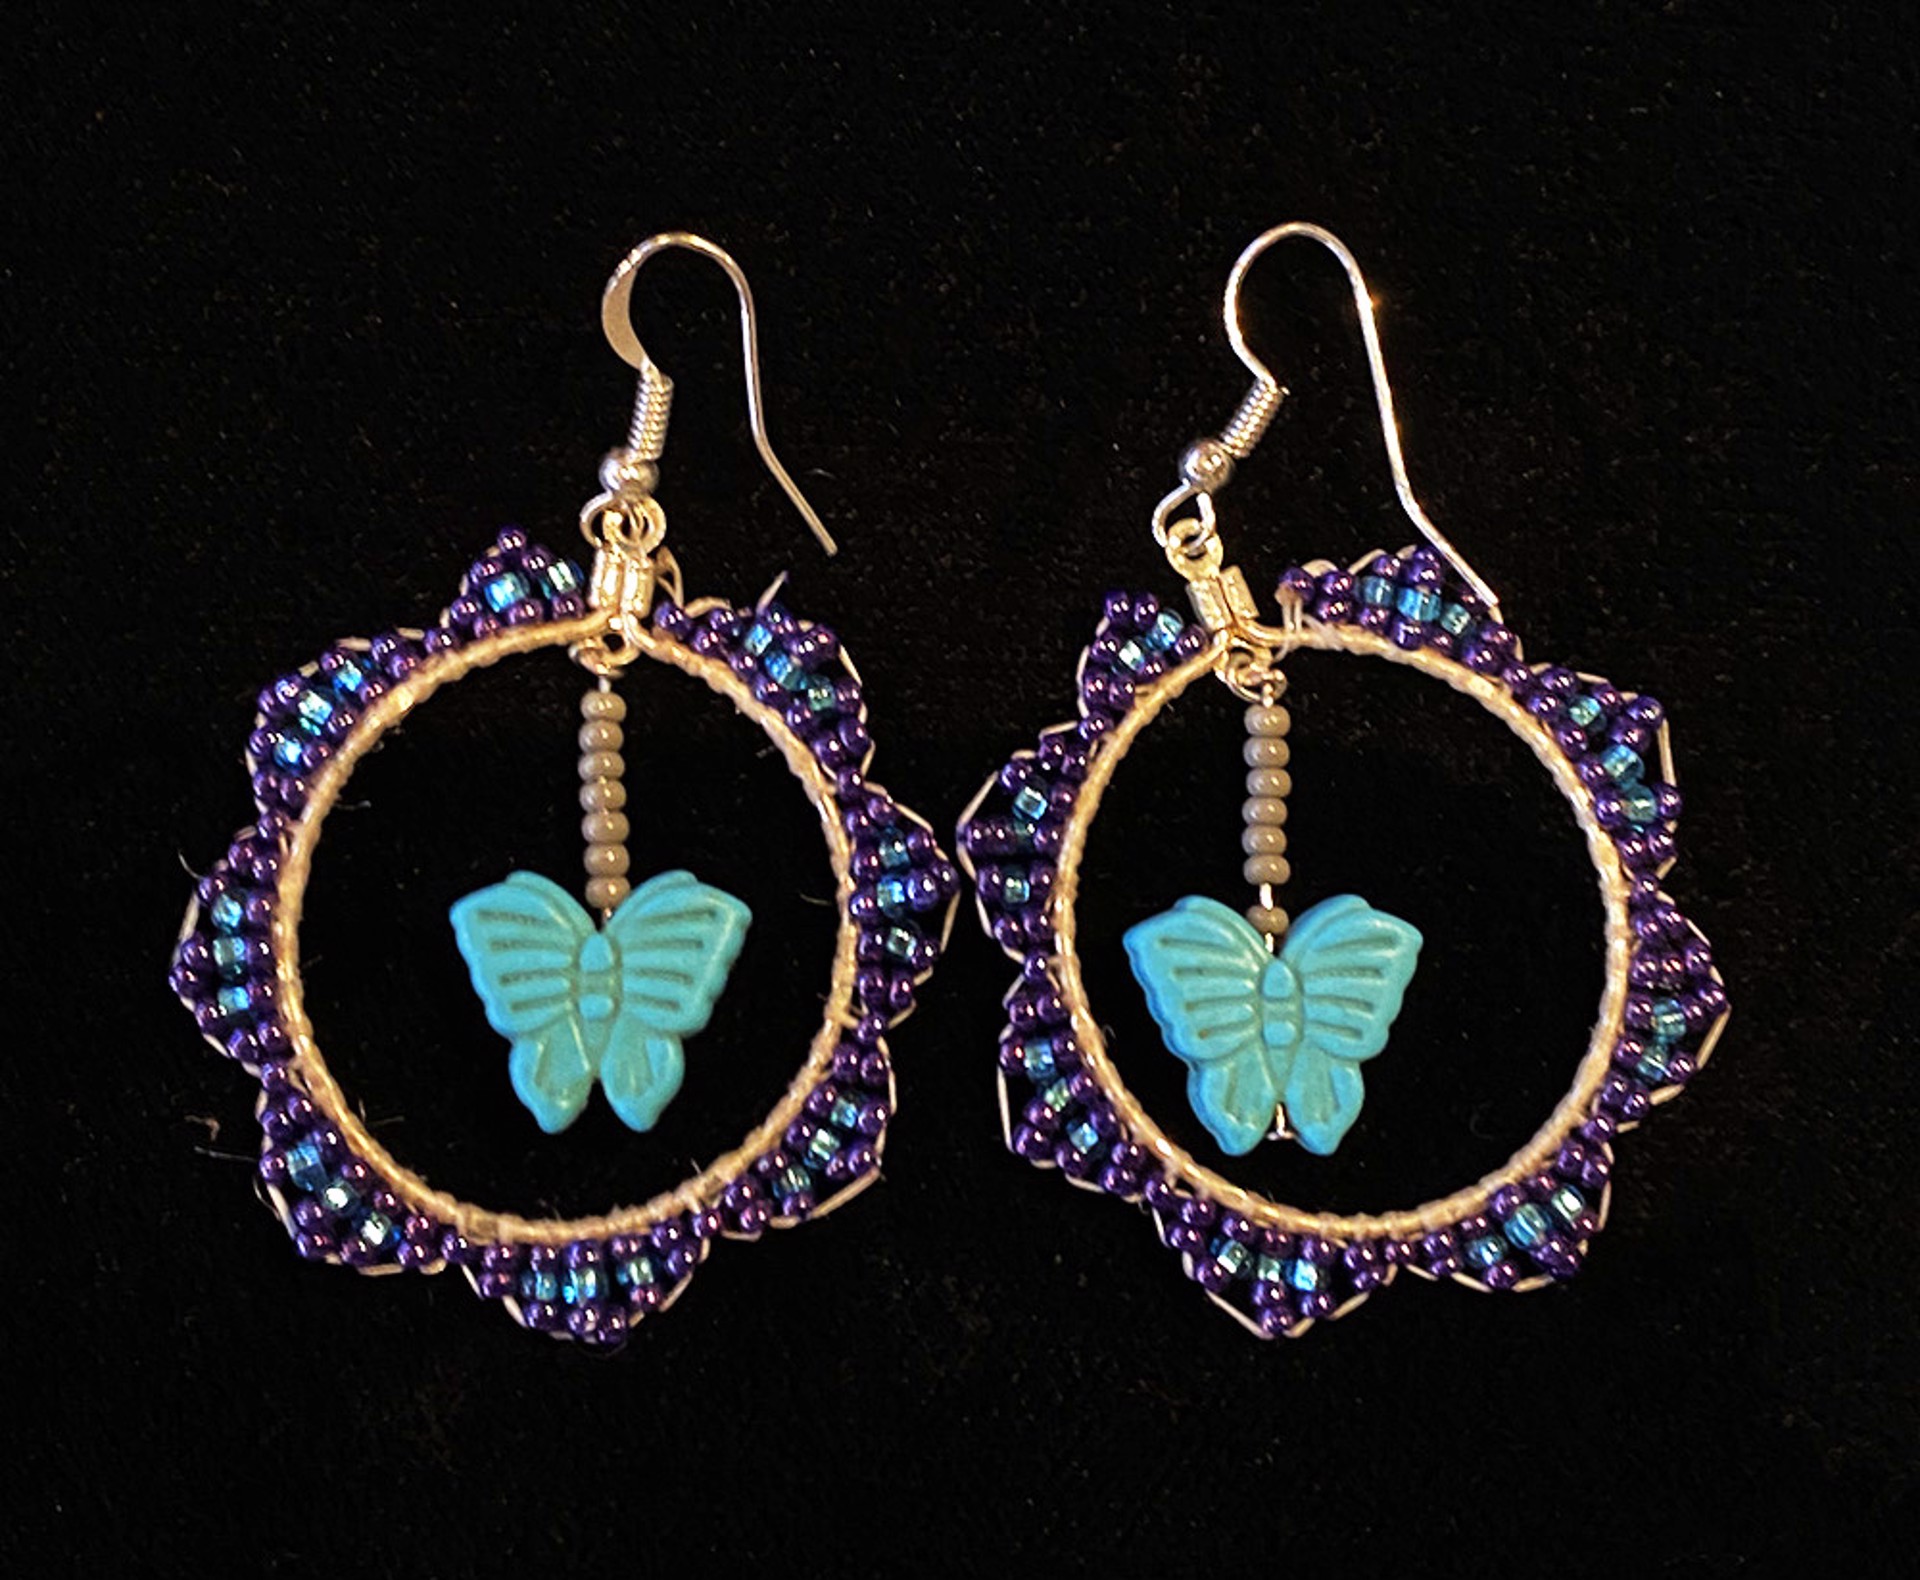 Handmade Navajo Mariposa Earrings by Artist Unknown